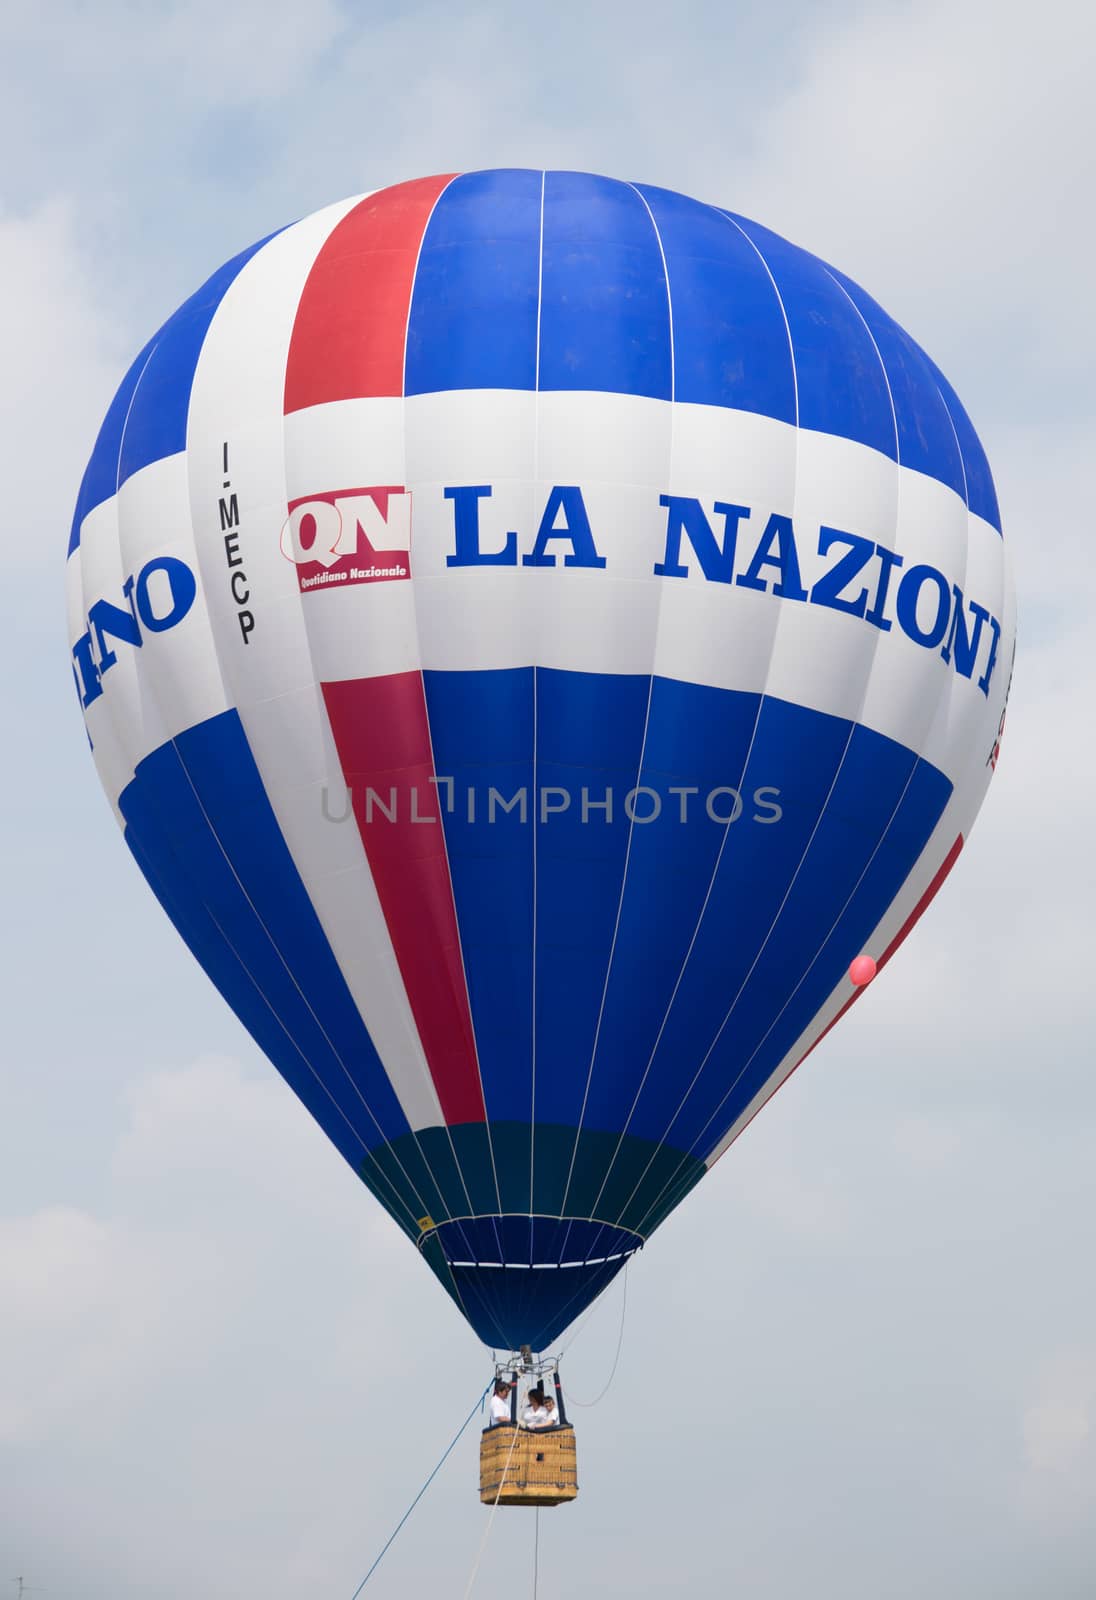 FERRARA, ITALY - SEPTEMBER 13: Ferrara ballon festival is a major annual gathering for fans of hot air balloons and paragliders on Ferrara Saturday, September 13, 2014.